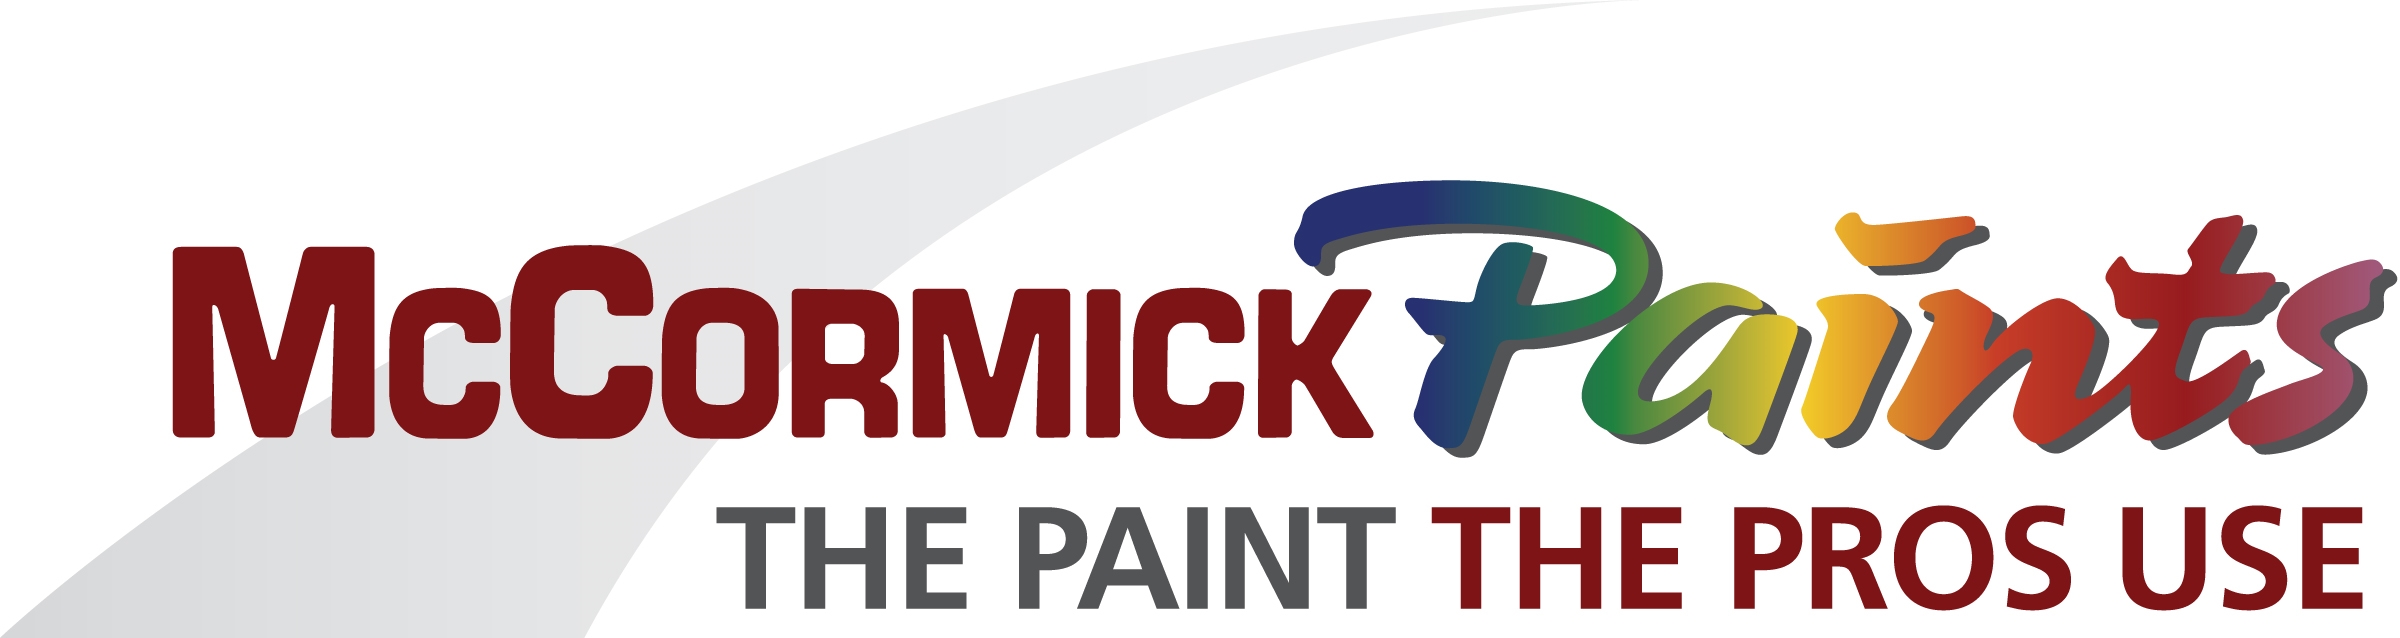 McCormick Paint Works Company logo